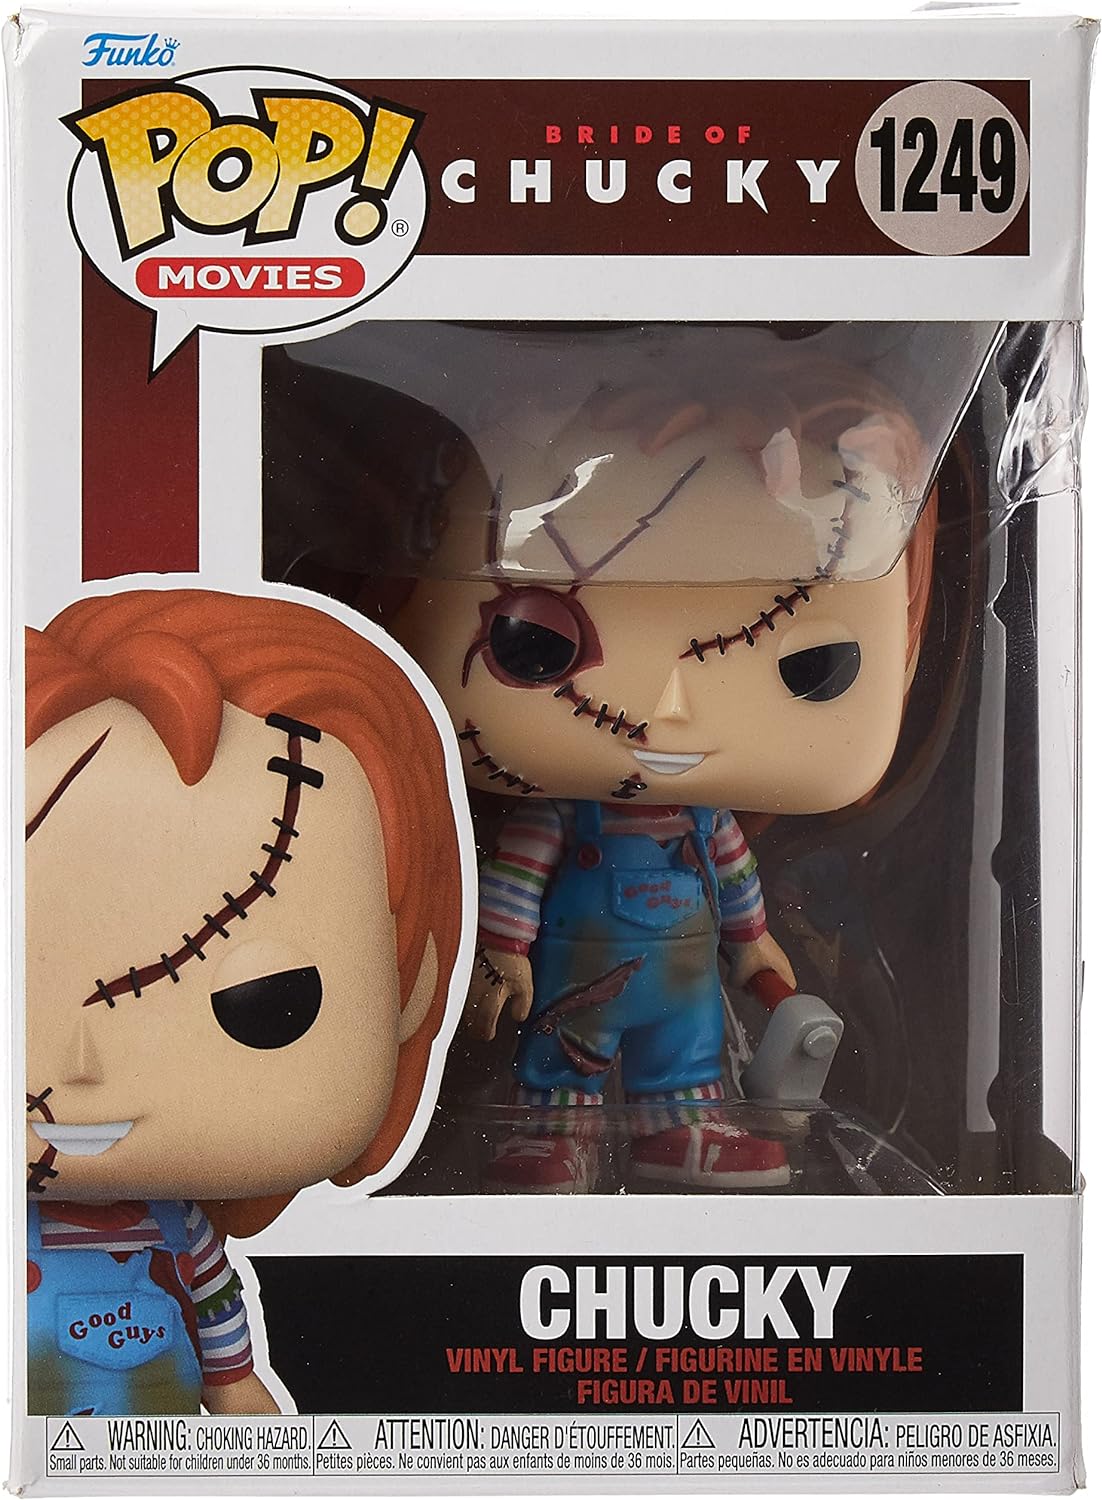 Funko Pop Movies: Bride of Chucky-Chucky #1249